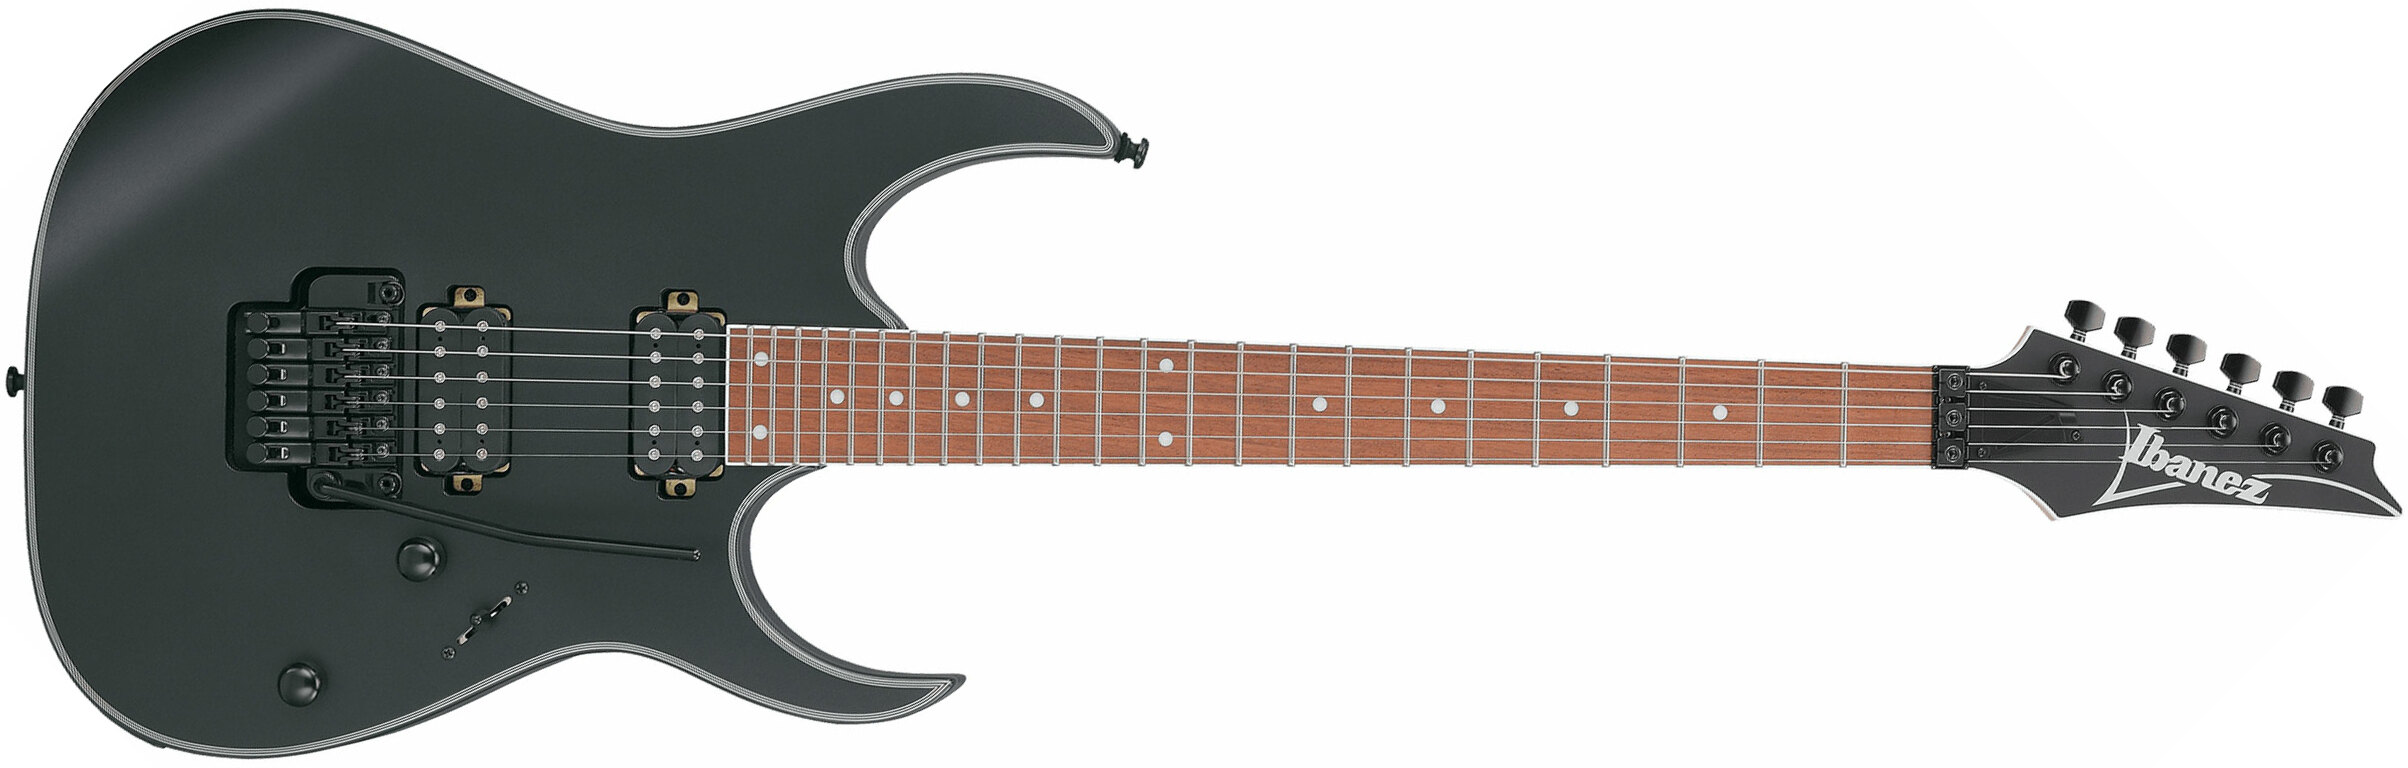 Ibanez Rg420ex Bkf Standard 2h Fr Jat - Black Flat - Str shape electric guitar - Main picture